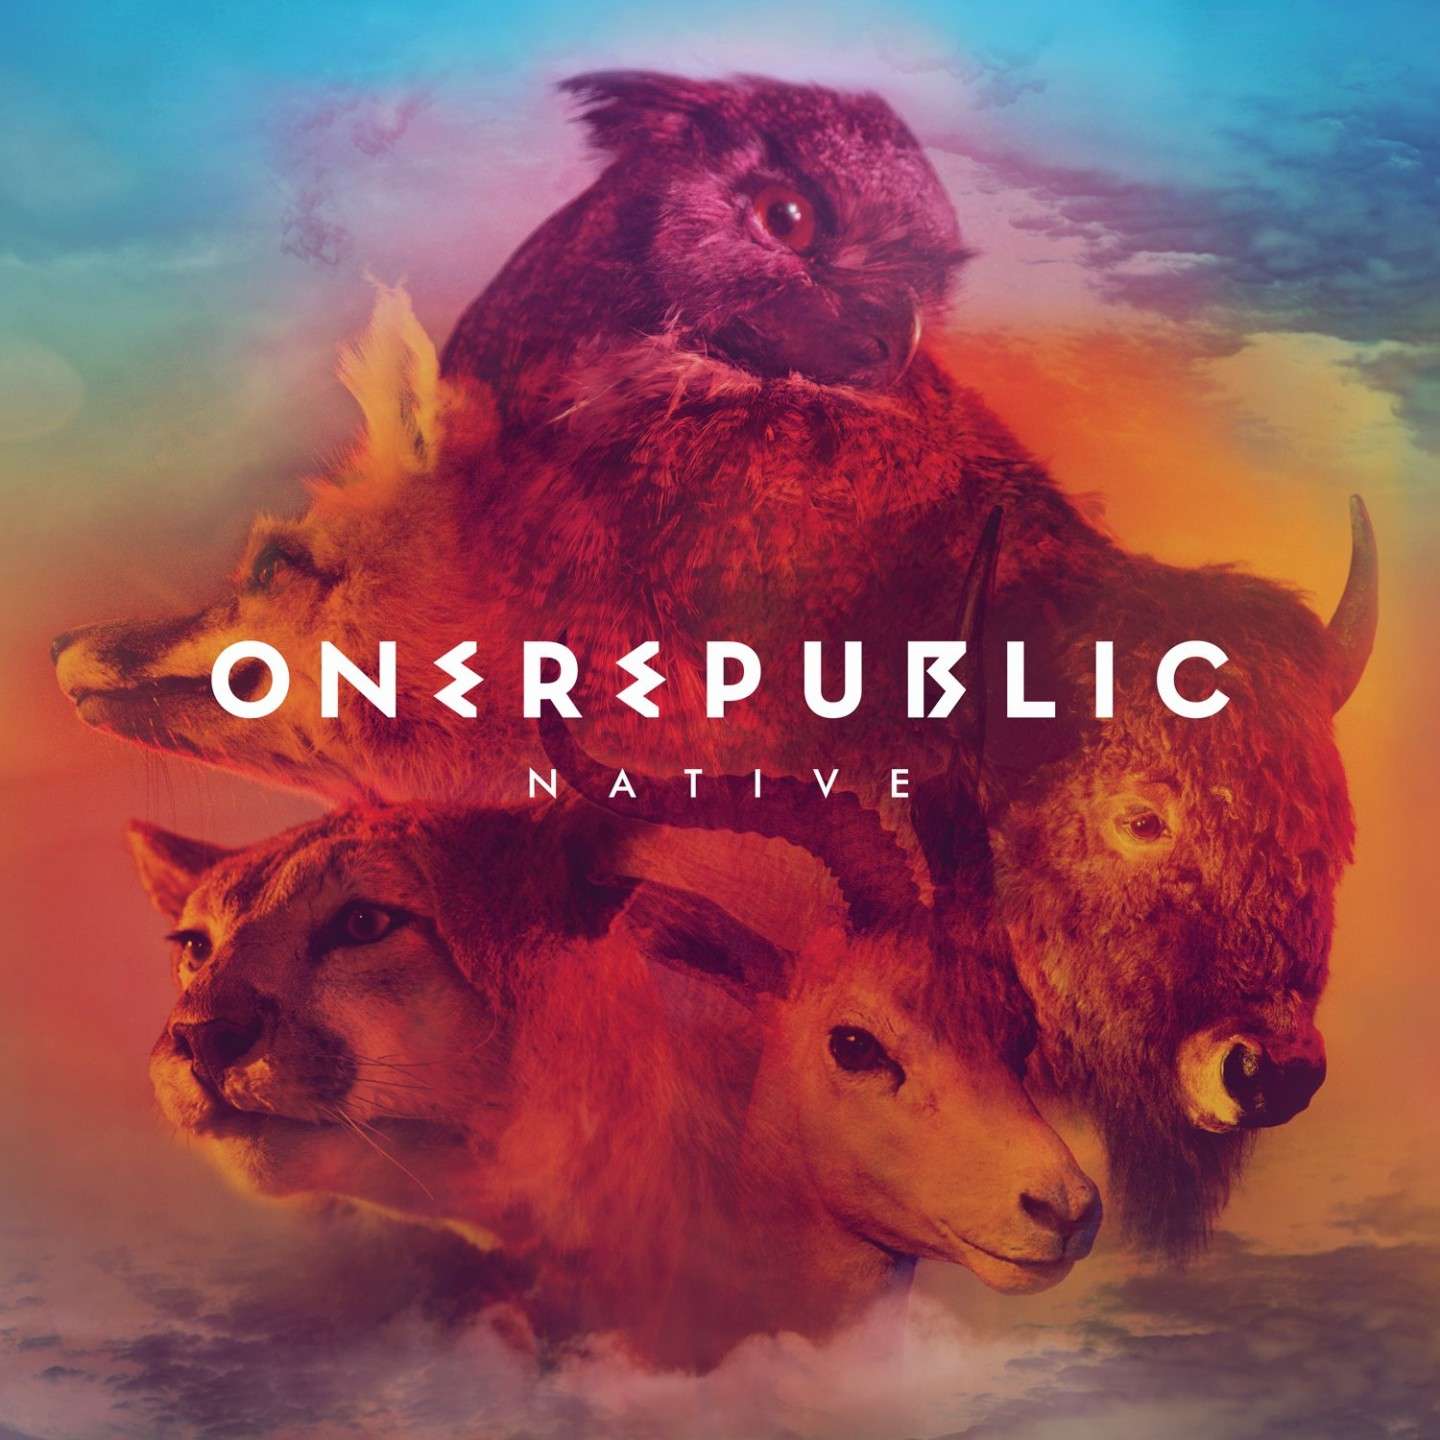 L'ultimo cd degli OneRepublic